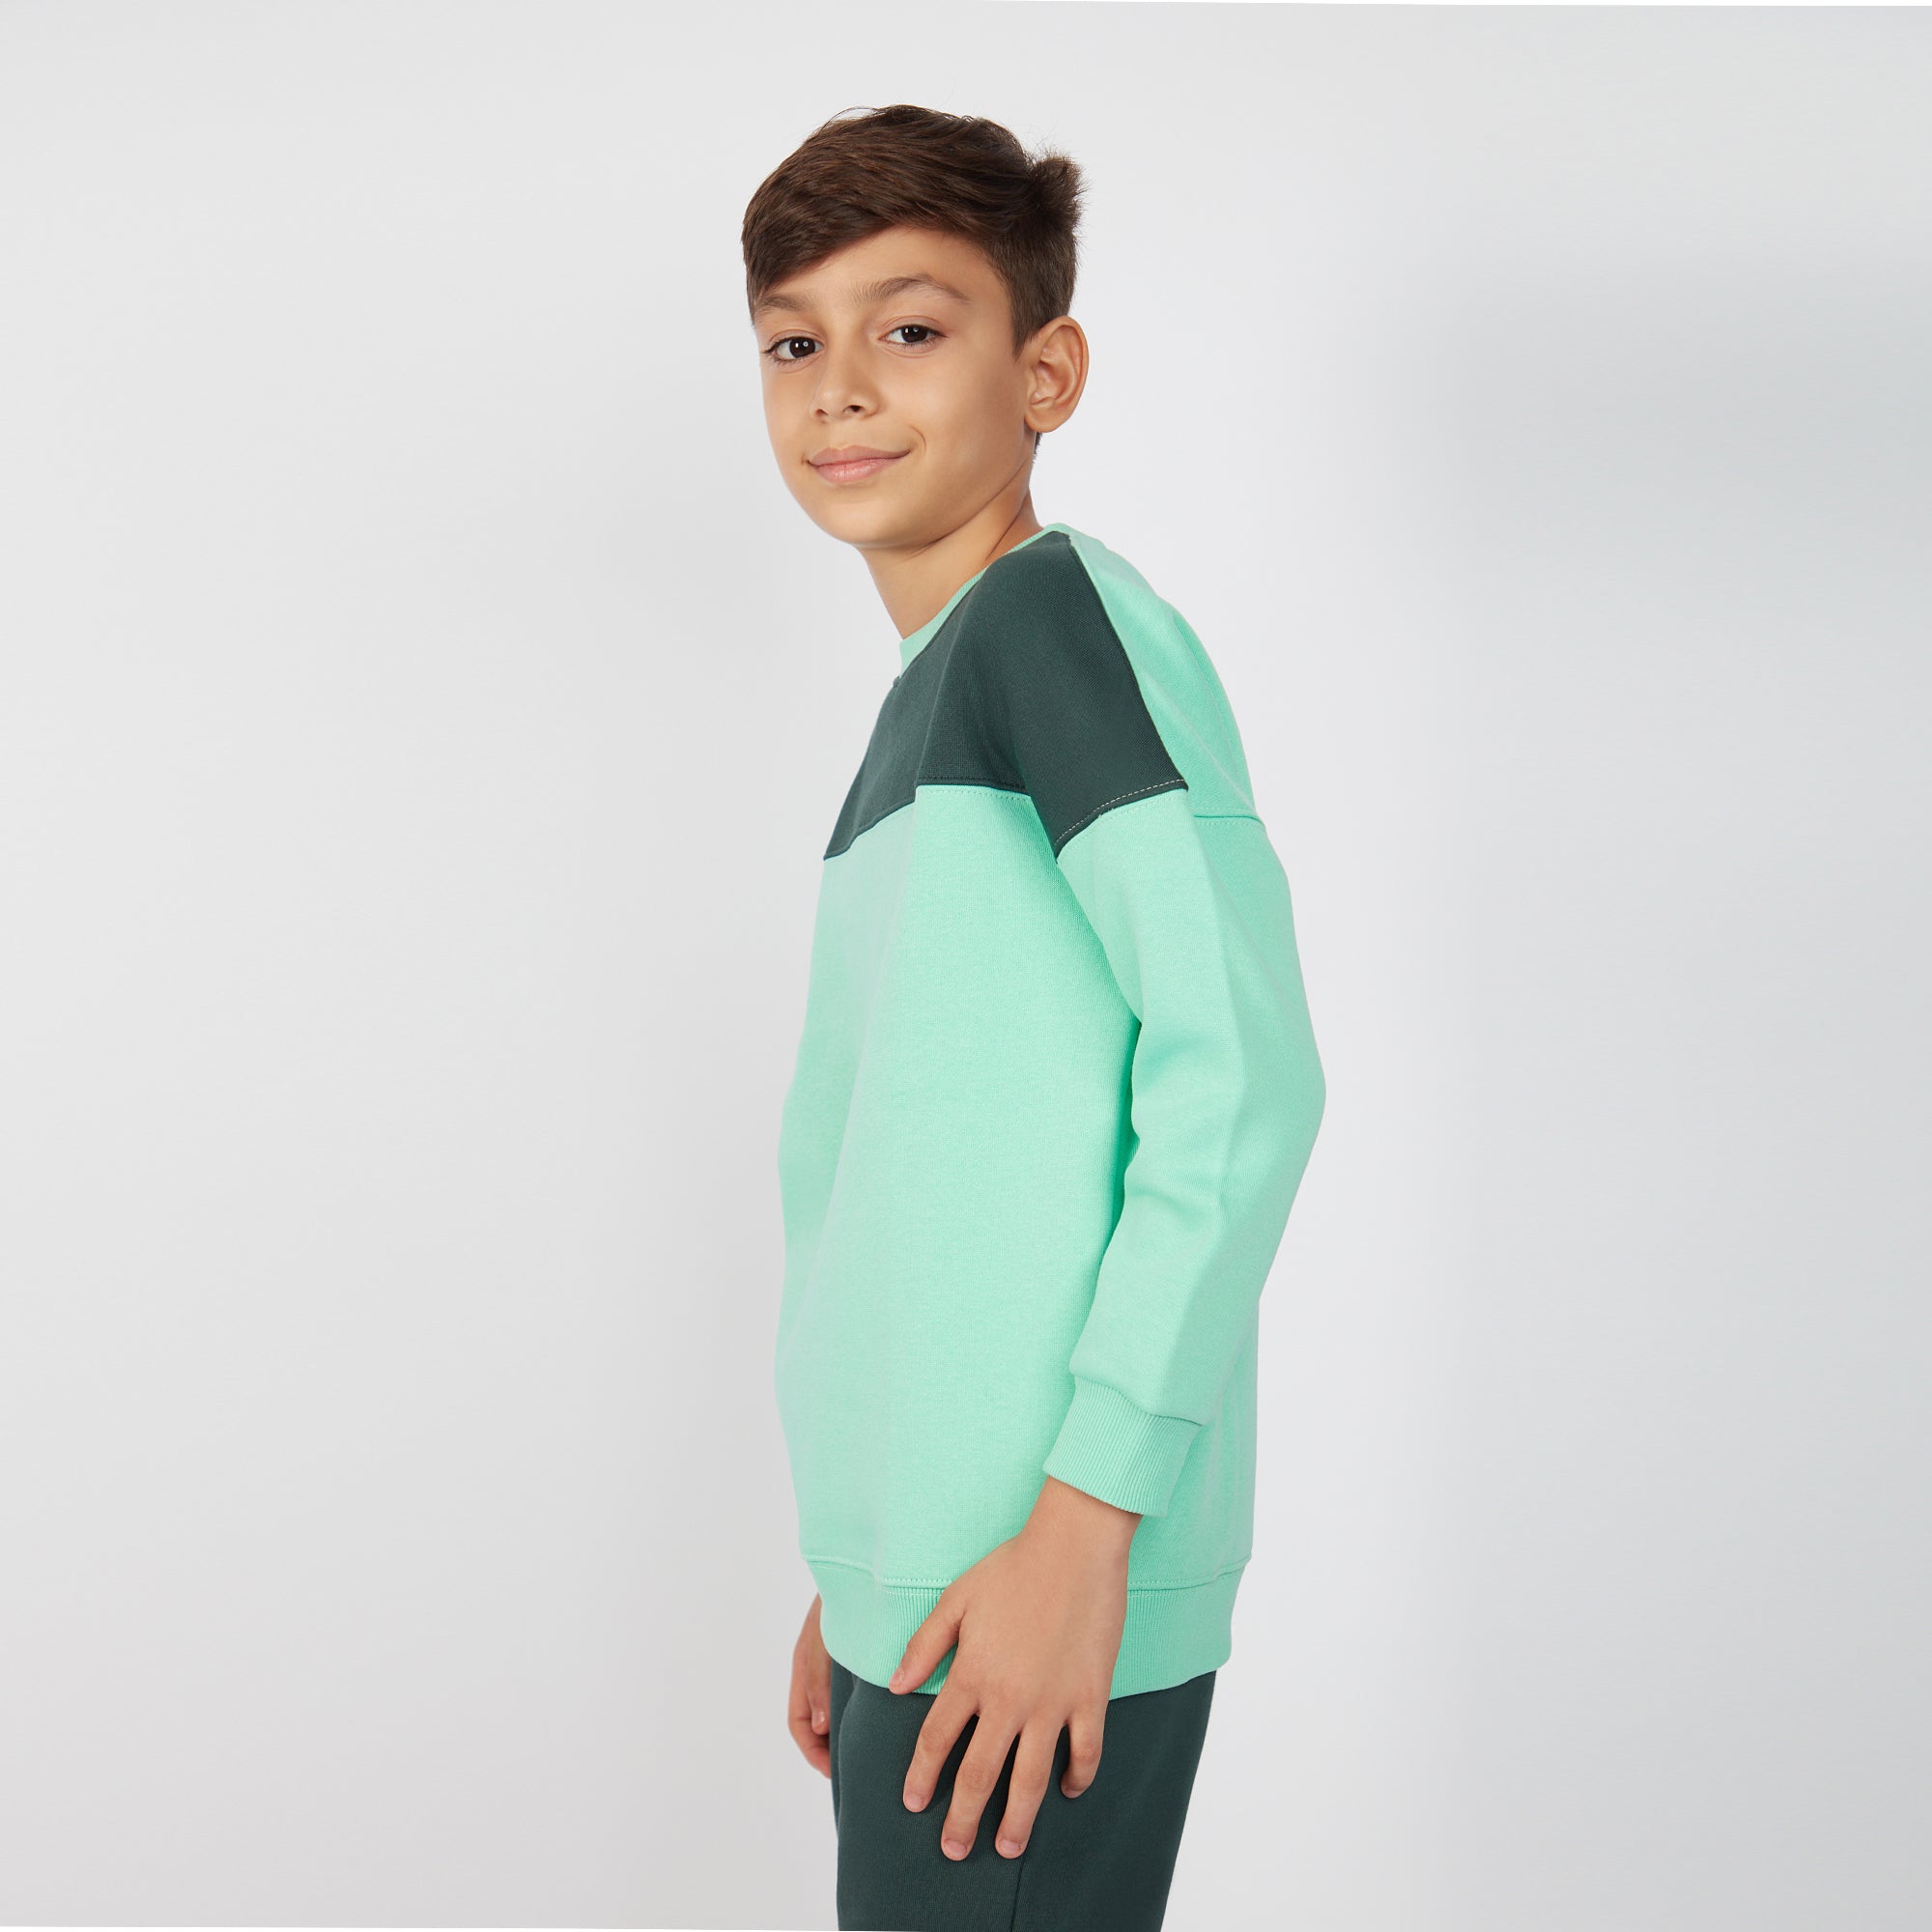 Bombay High Boy's Sea Green Color Block Knit Sweatshirt